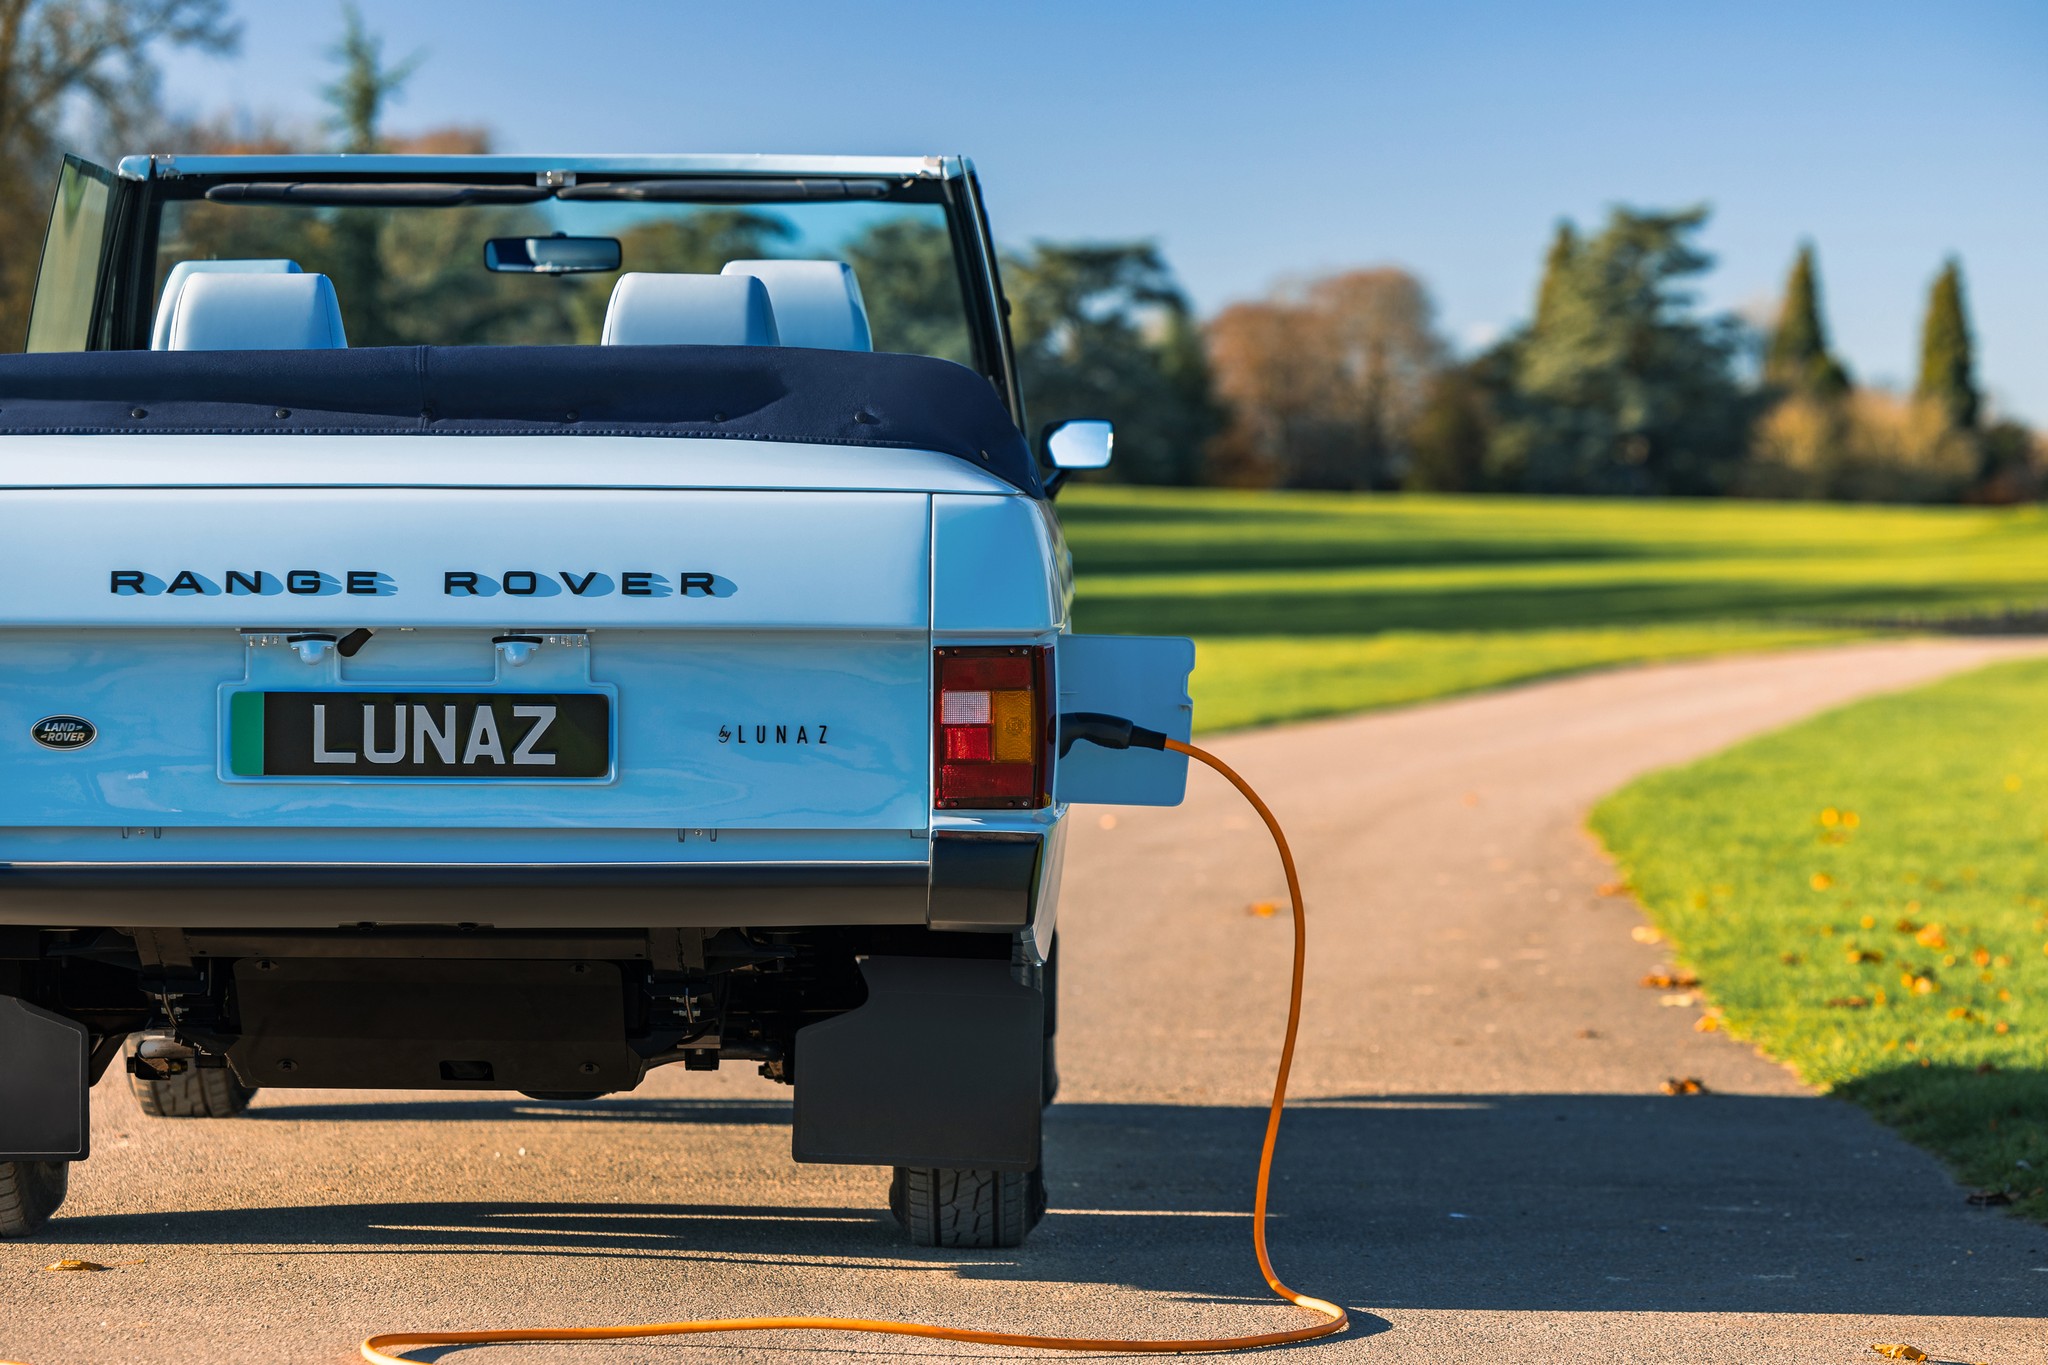 Range Rover - Lunaz